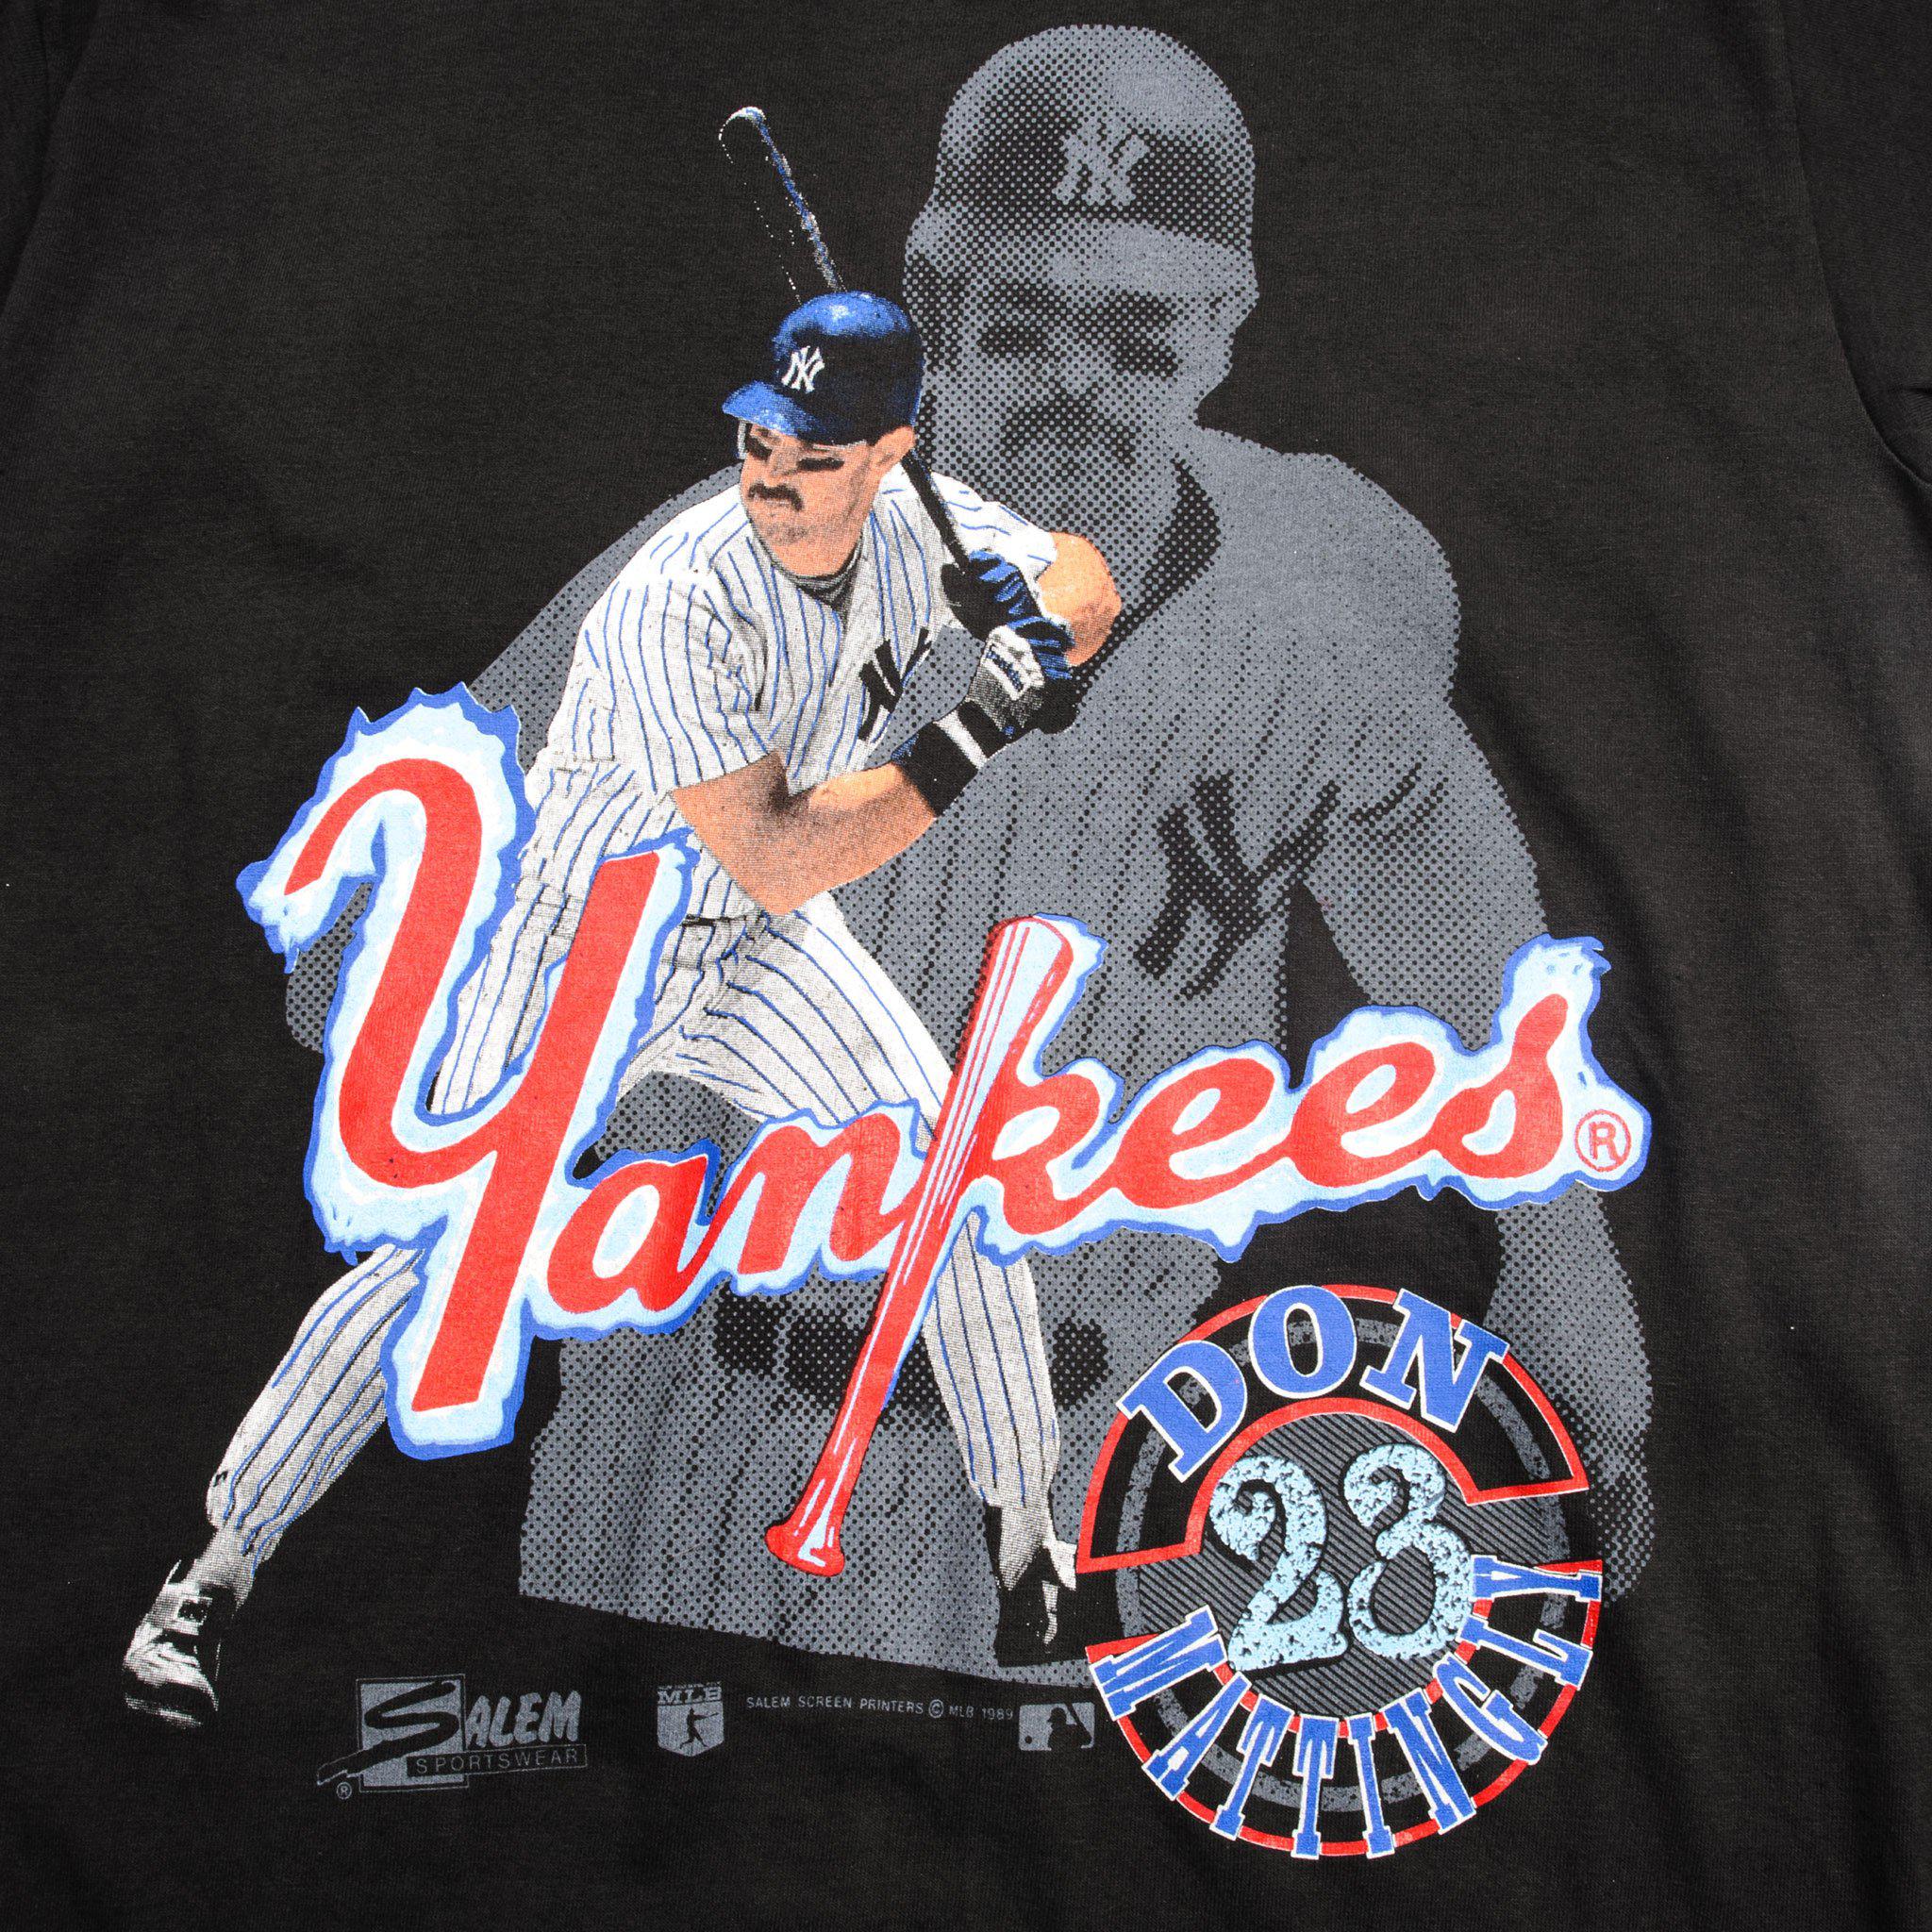 Vintage 80s White MLB New York Yankees Don Mattingly 80s Single